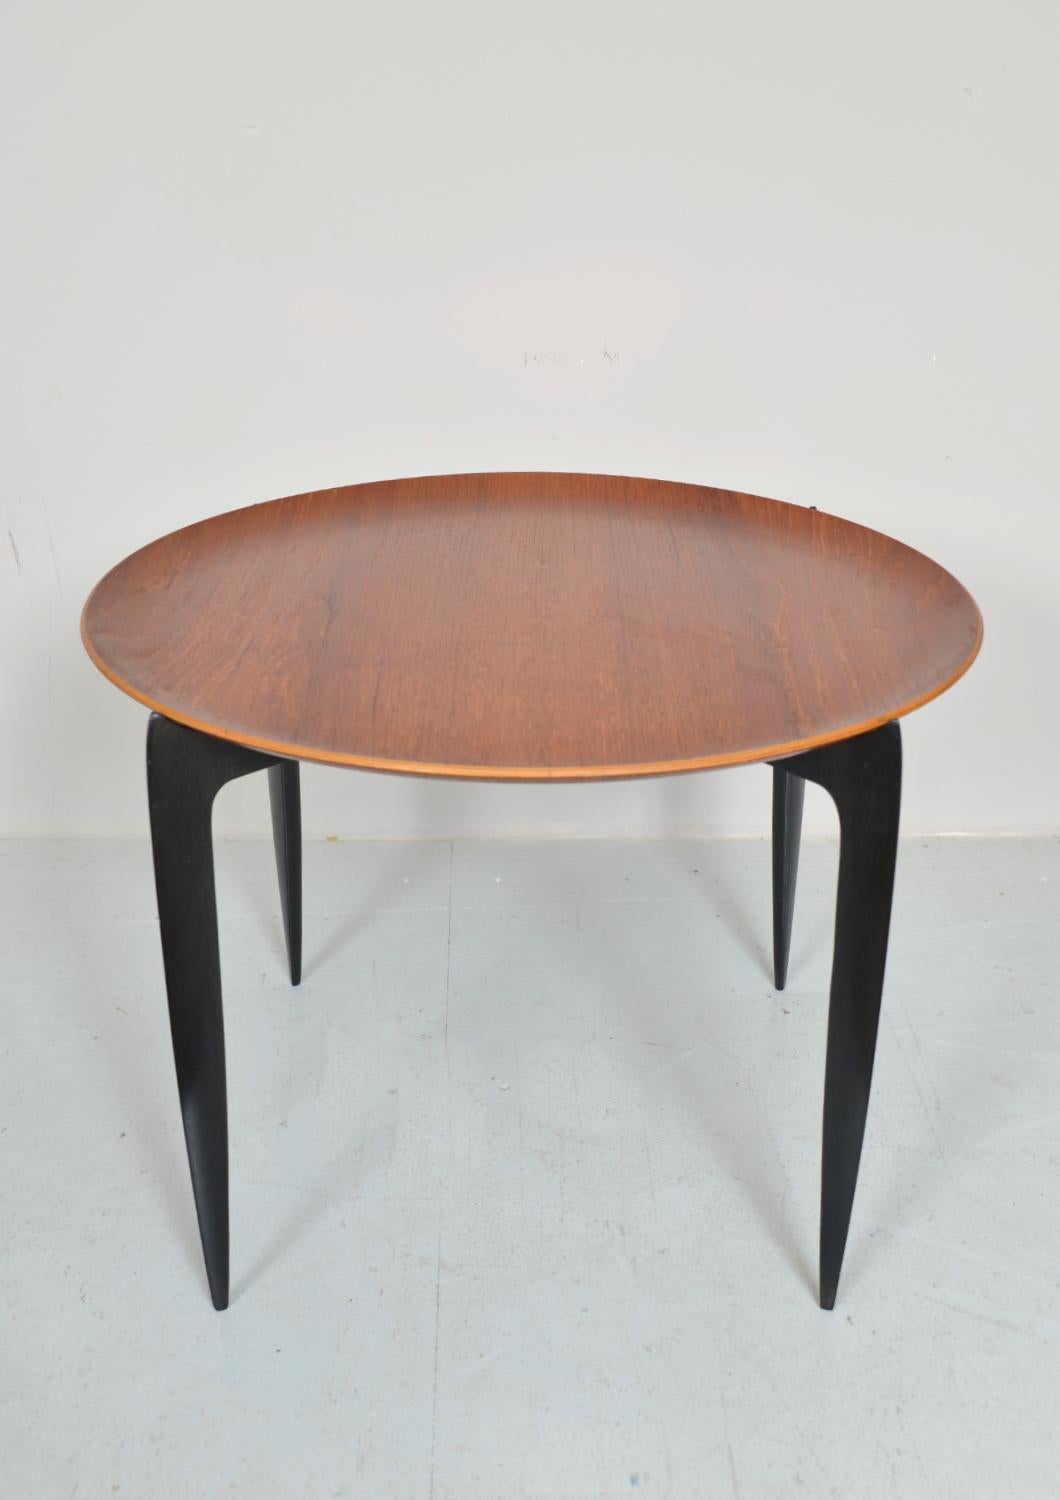 Danish Mid-Century Fritz Hansen Teak Tray Table by Engholm & Willumsen Denmark 1960s For Sale